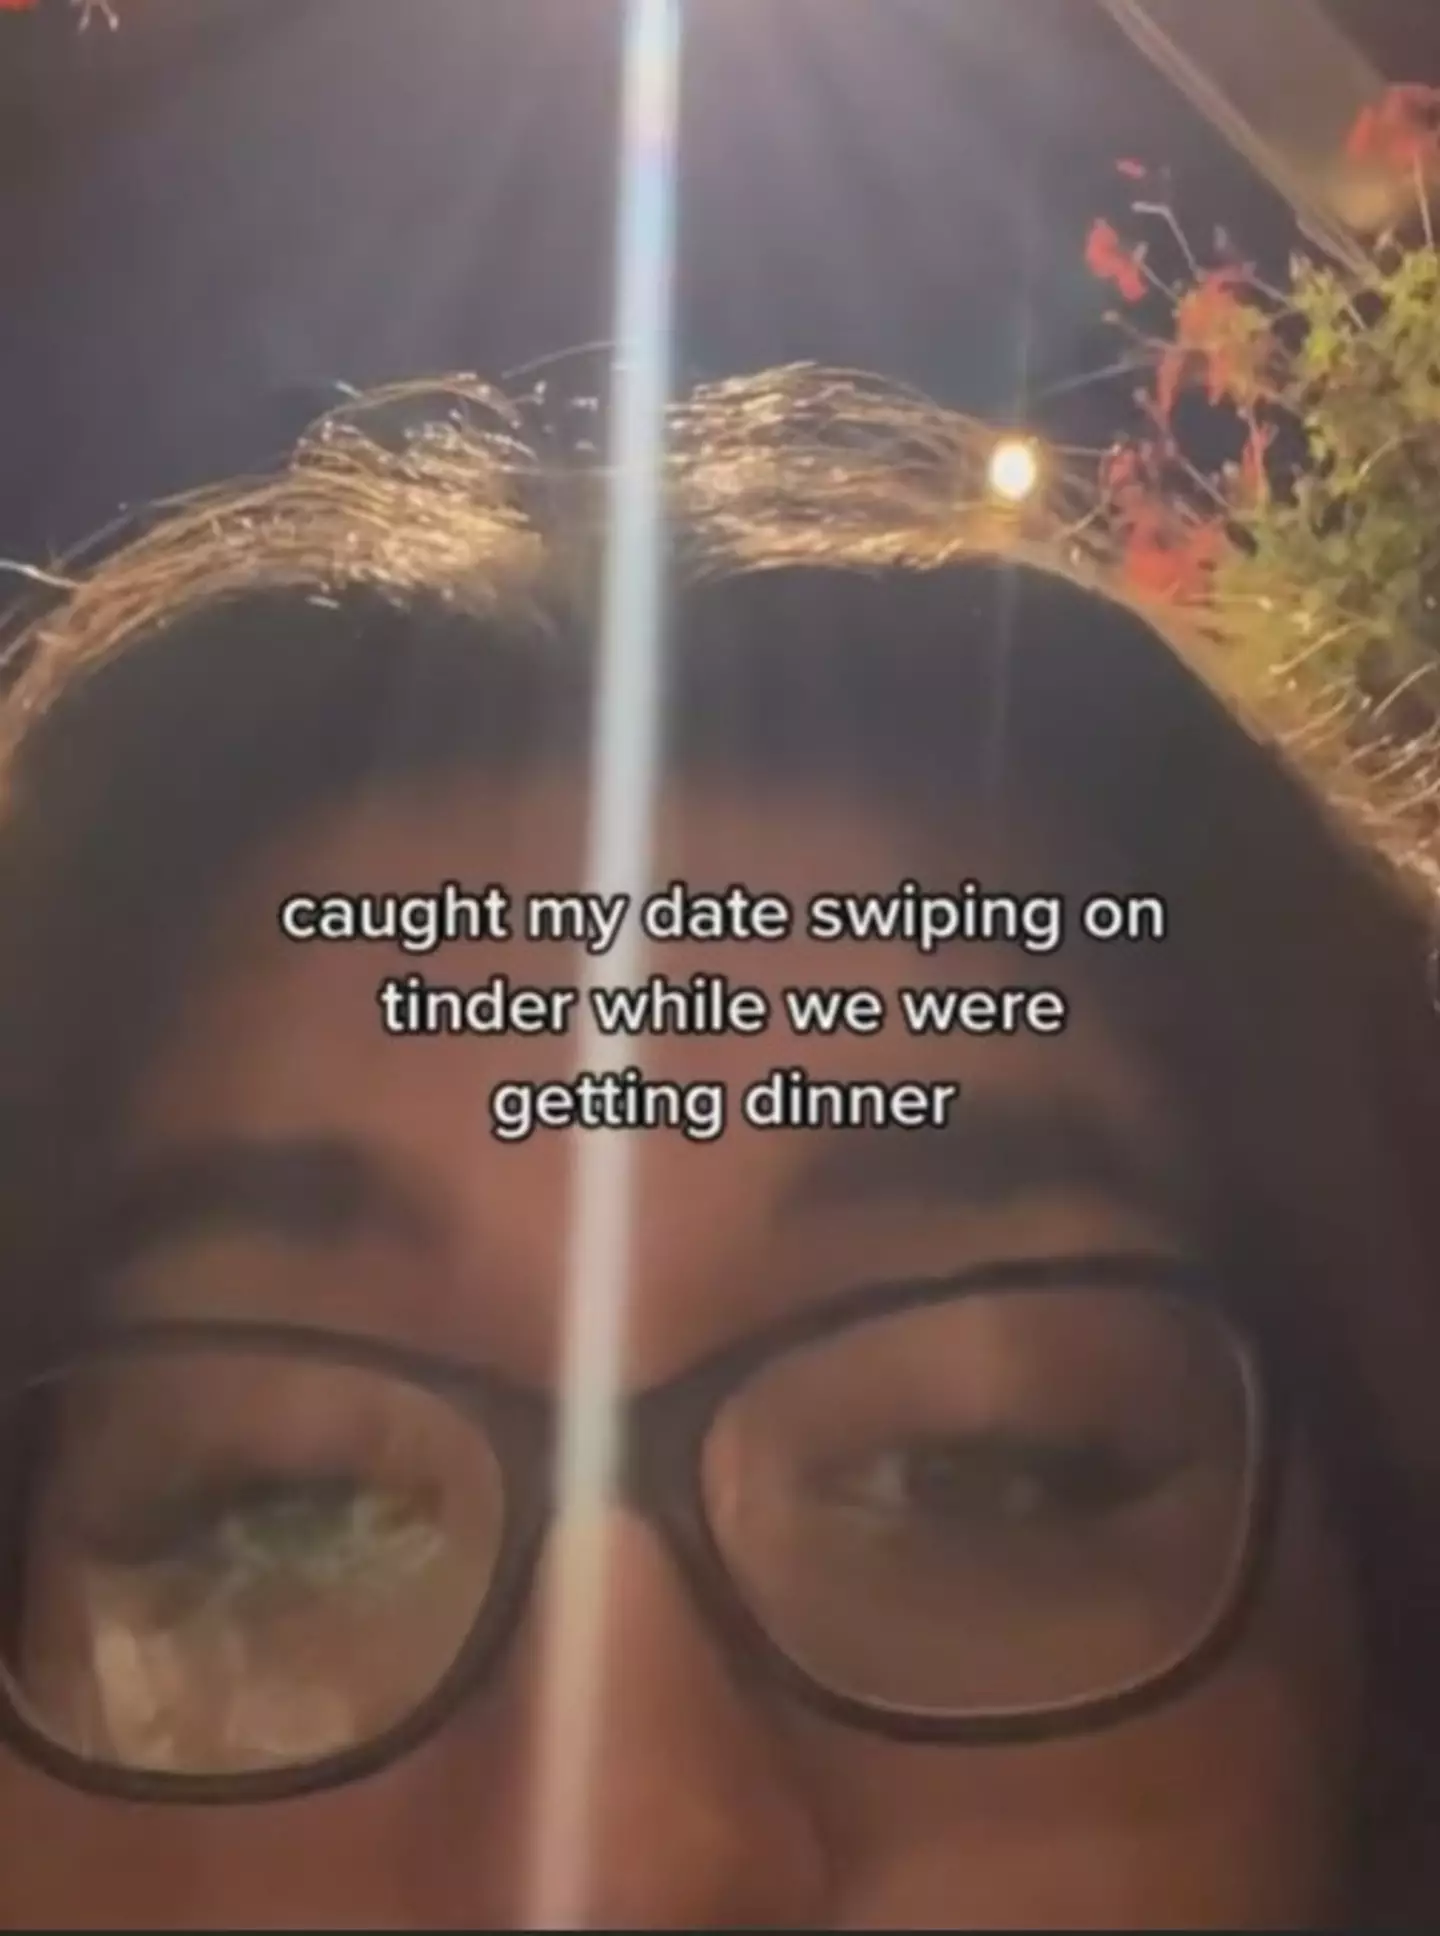 TikTok user @totallykri caught her date on Tinder during their meal.